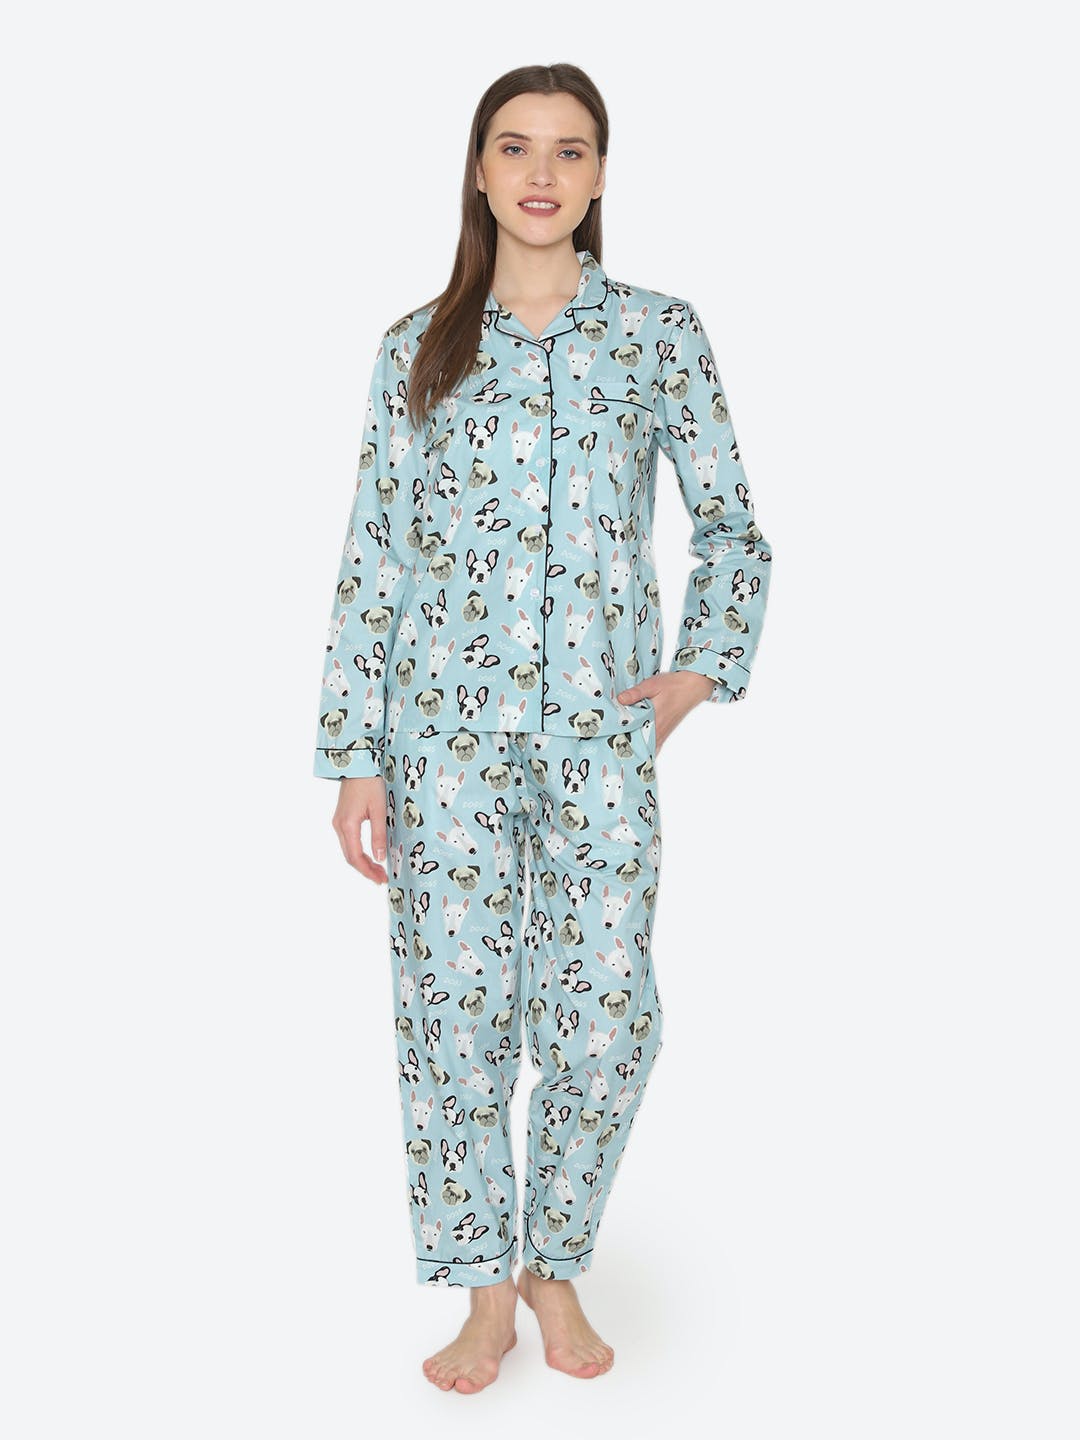 Get Bow Wow Cotton Pyjama Set at ₹ 2200 | LBB Shop